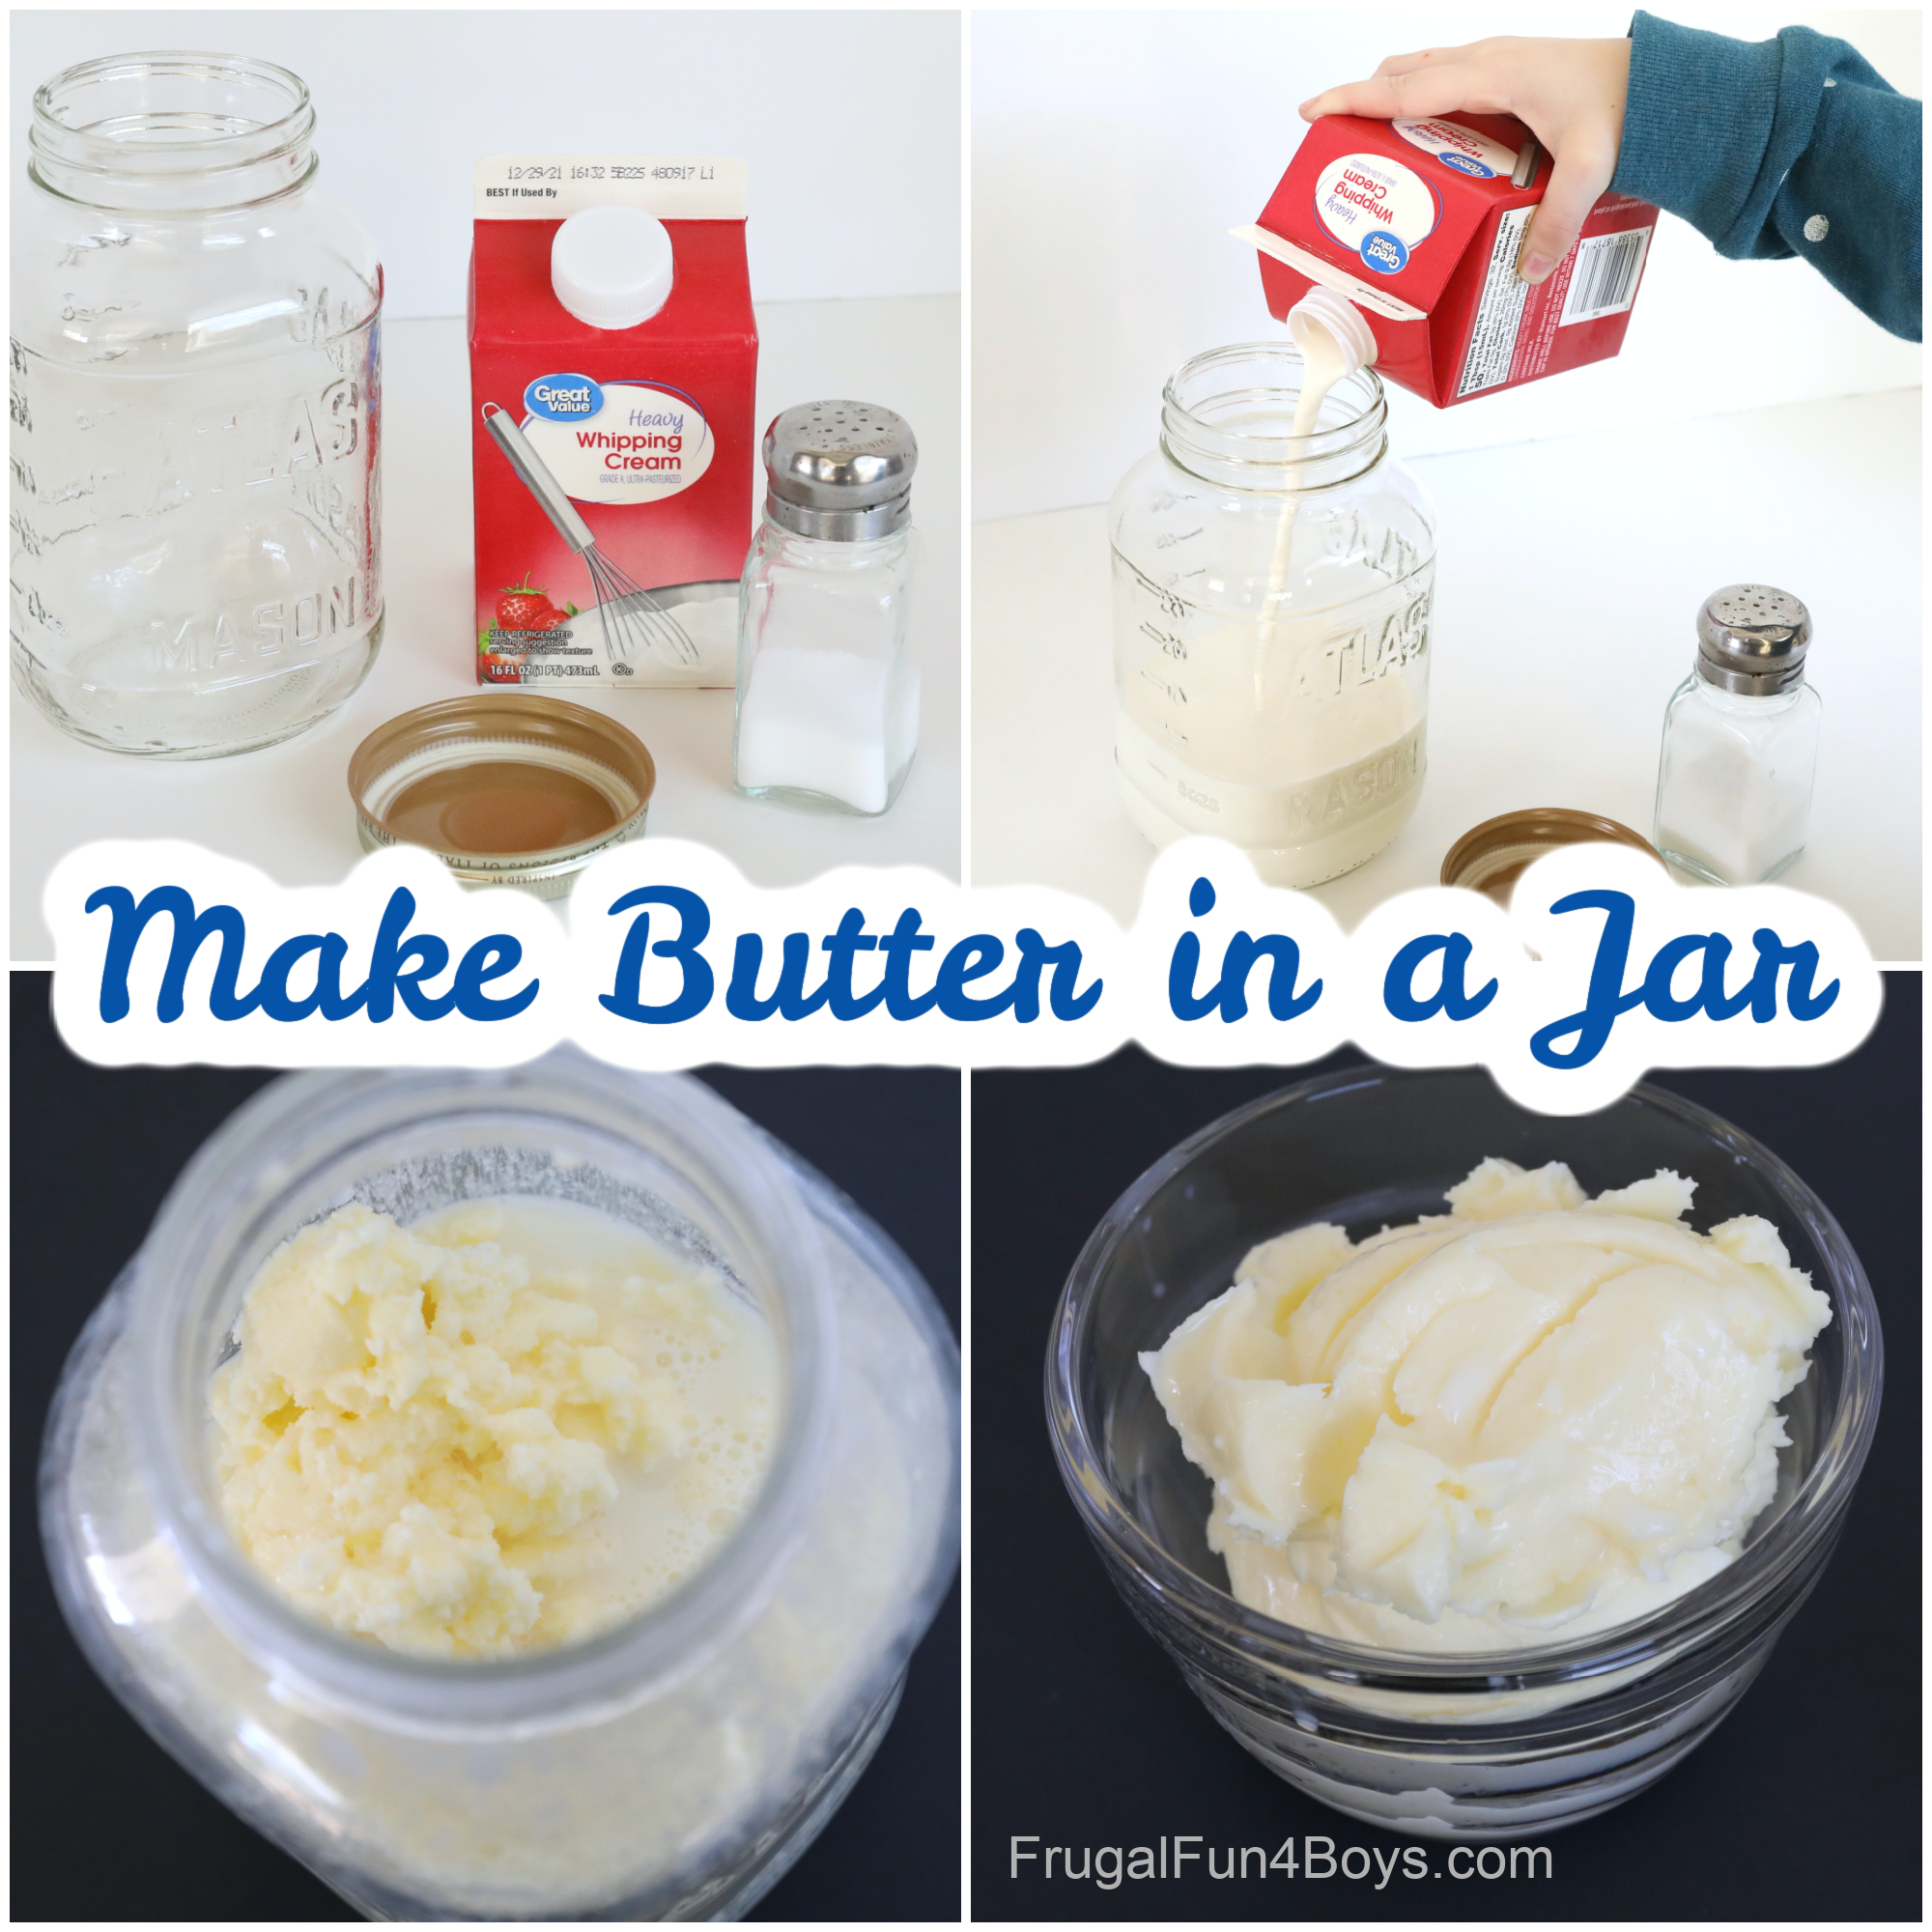 Make butter in a jar